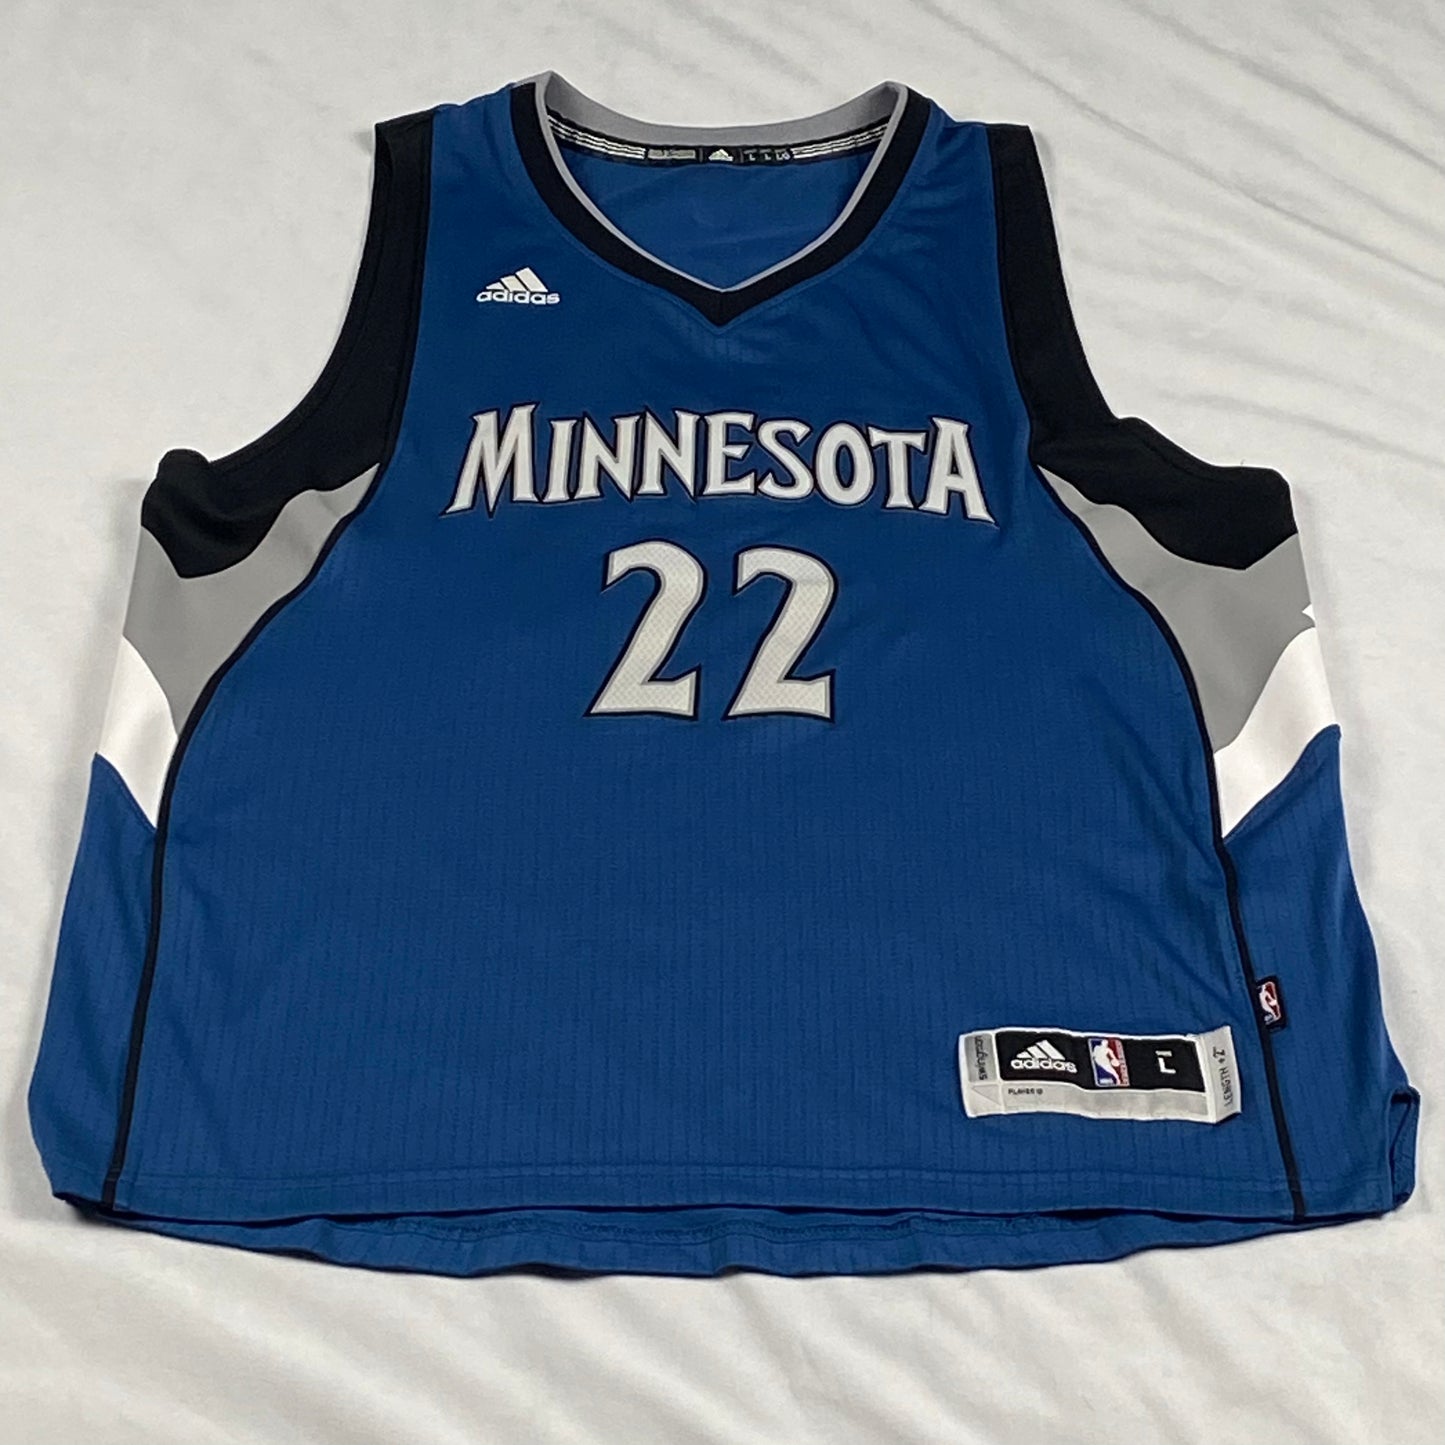 Minnesota Timberwolves Andrew Wiggins Adidas Swingman NBA Basketball Jersey